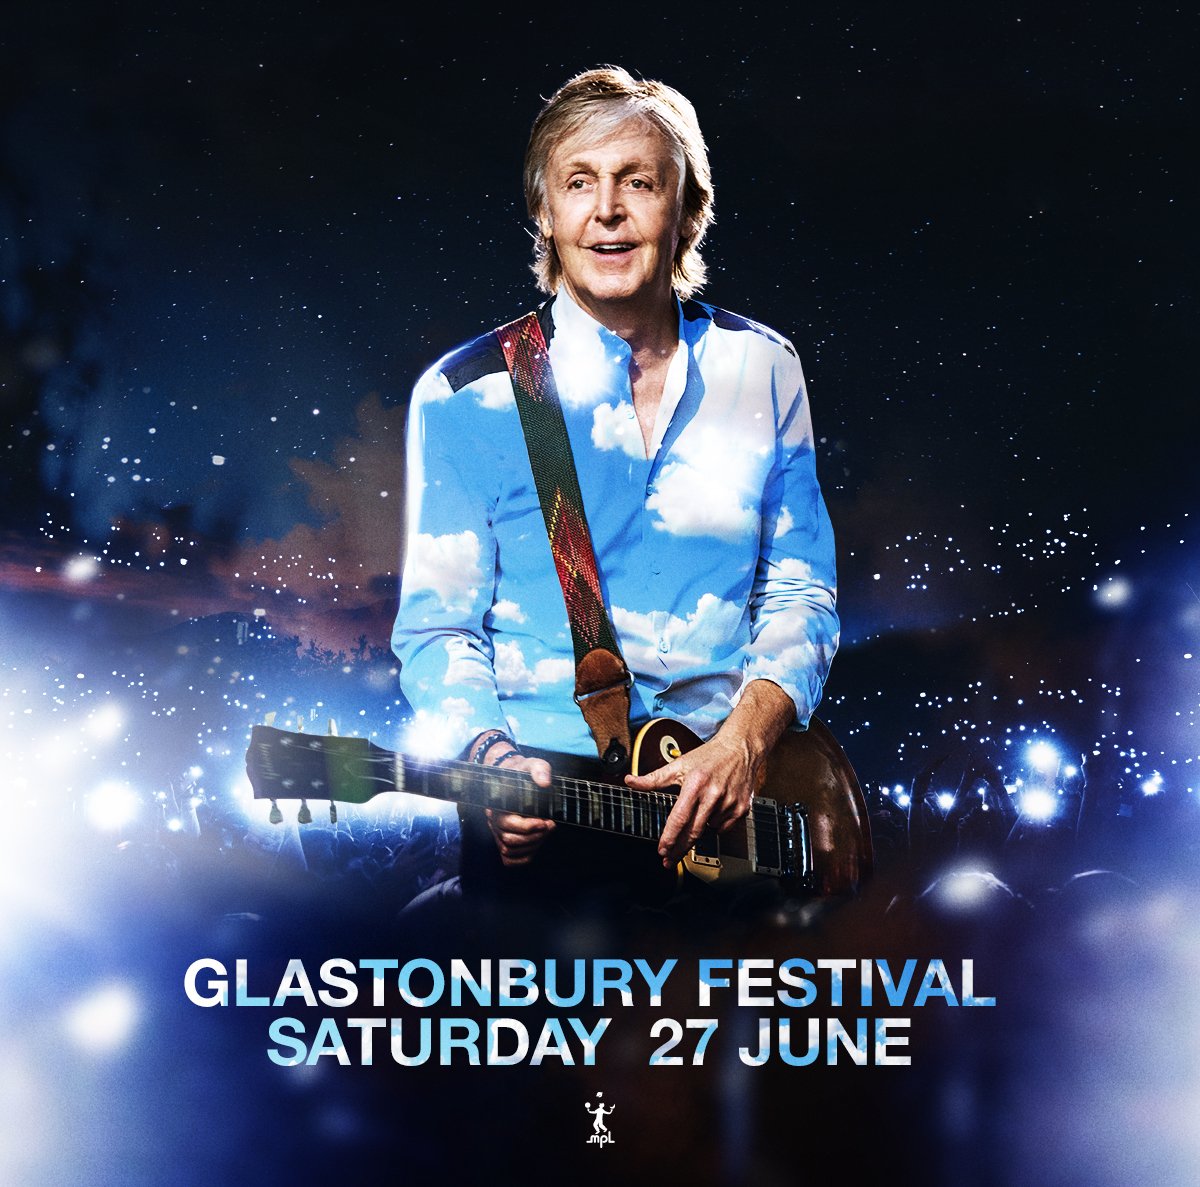 Paul McCartney encabezerá los 50 años de Glastonbury